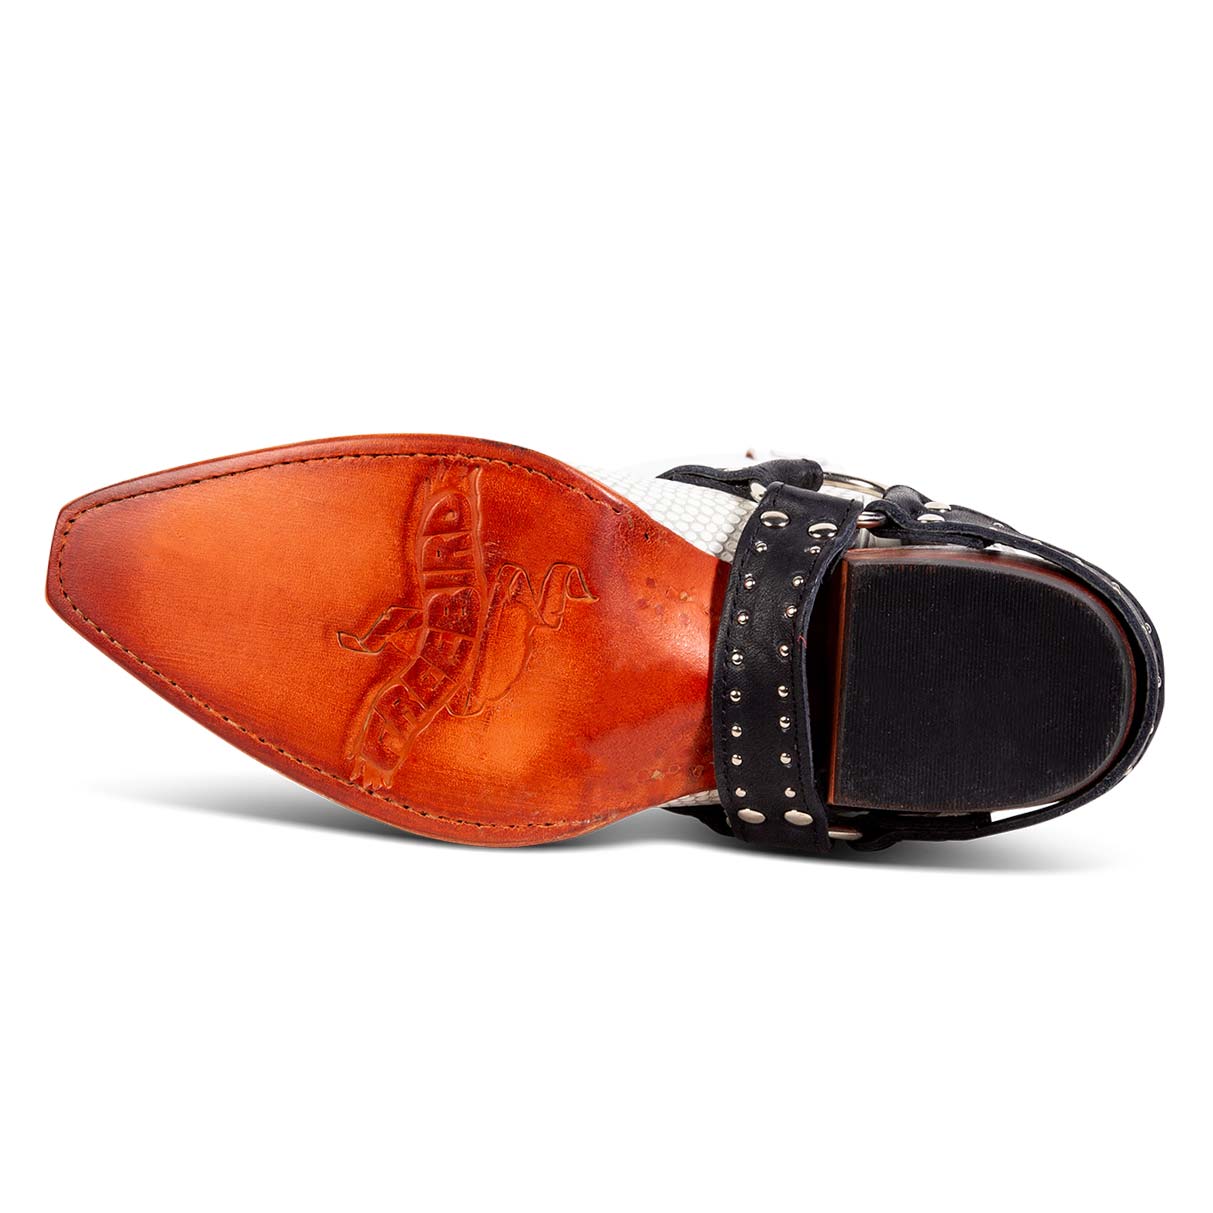 Orange leather sole imprinted with FREEBIRD on women's Lusitano white snake boot